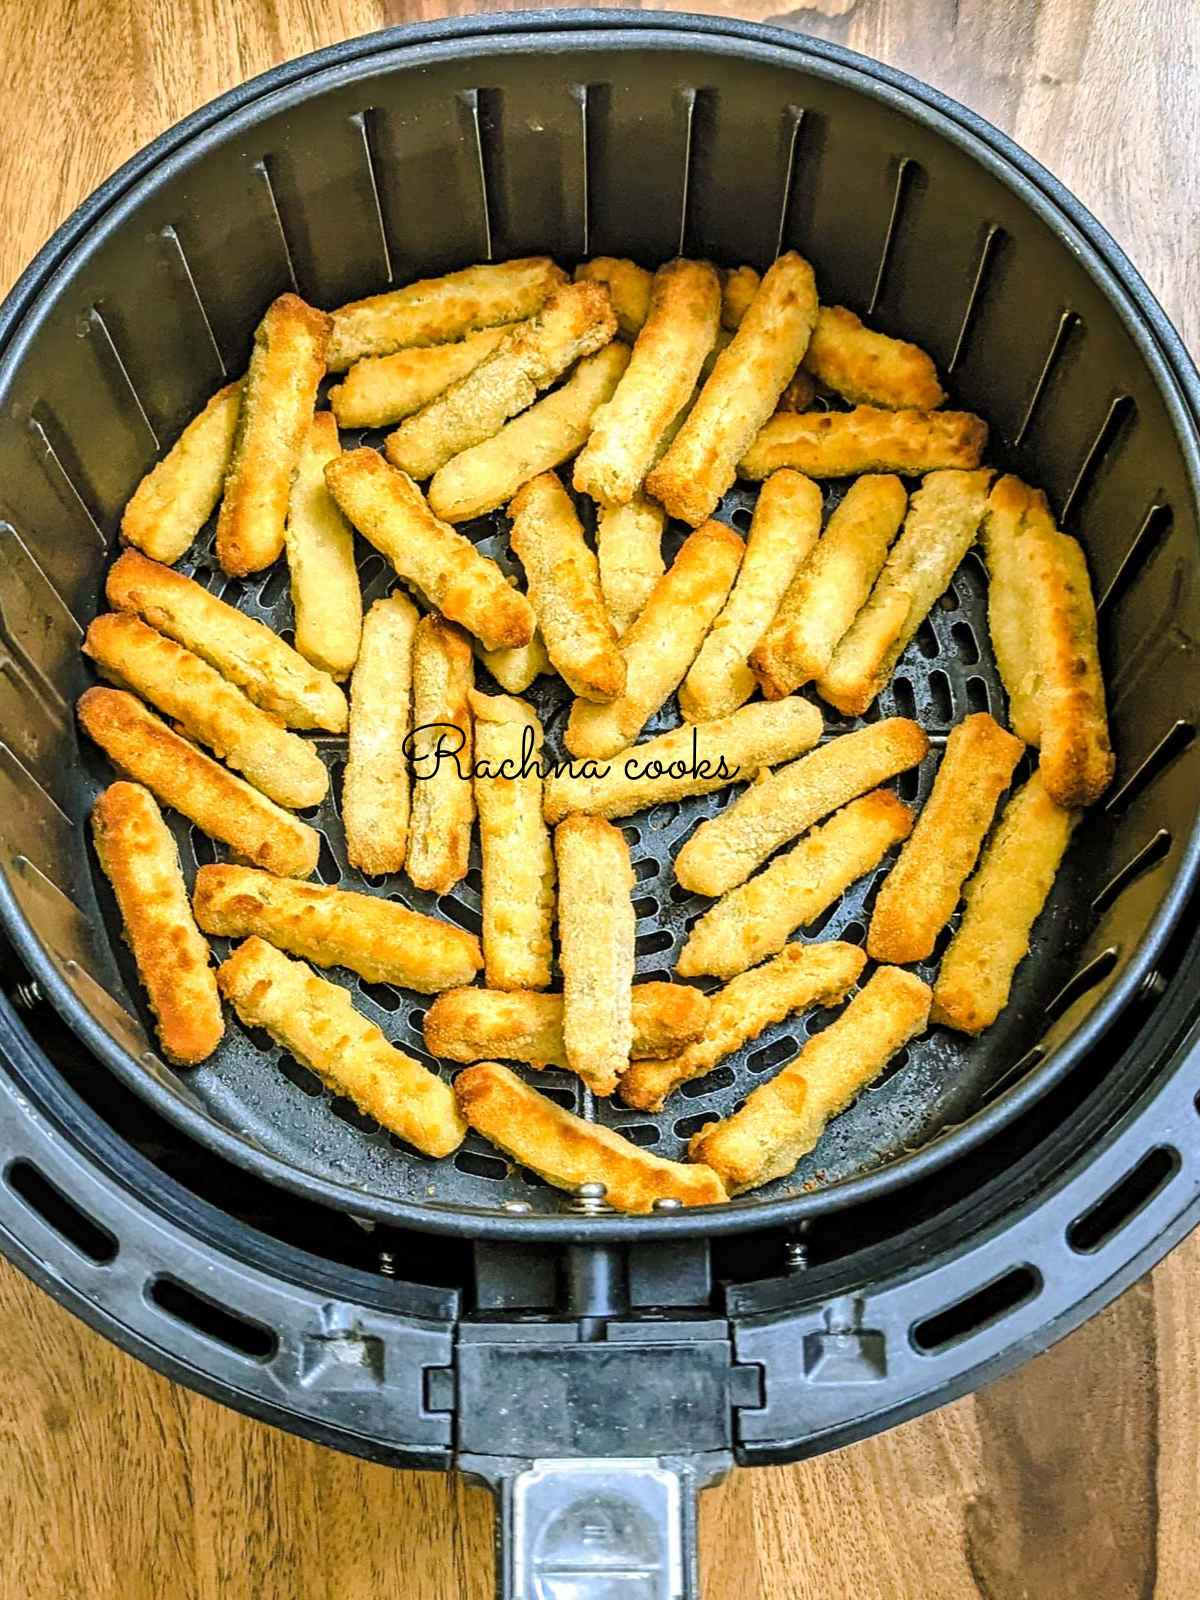 Golden fried chicken fries in air fryer basket after air frying.